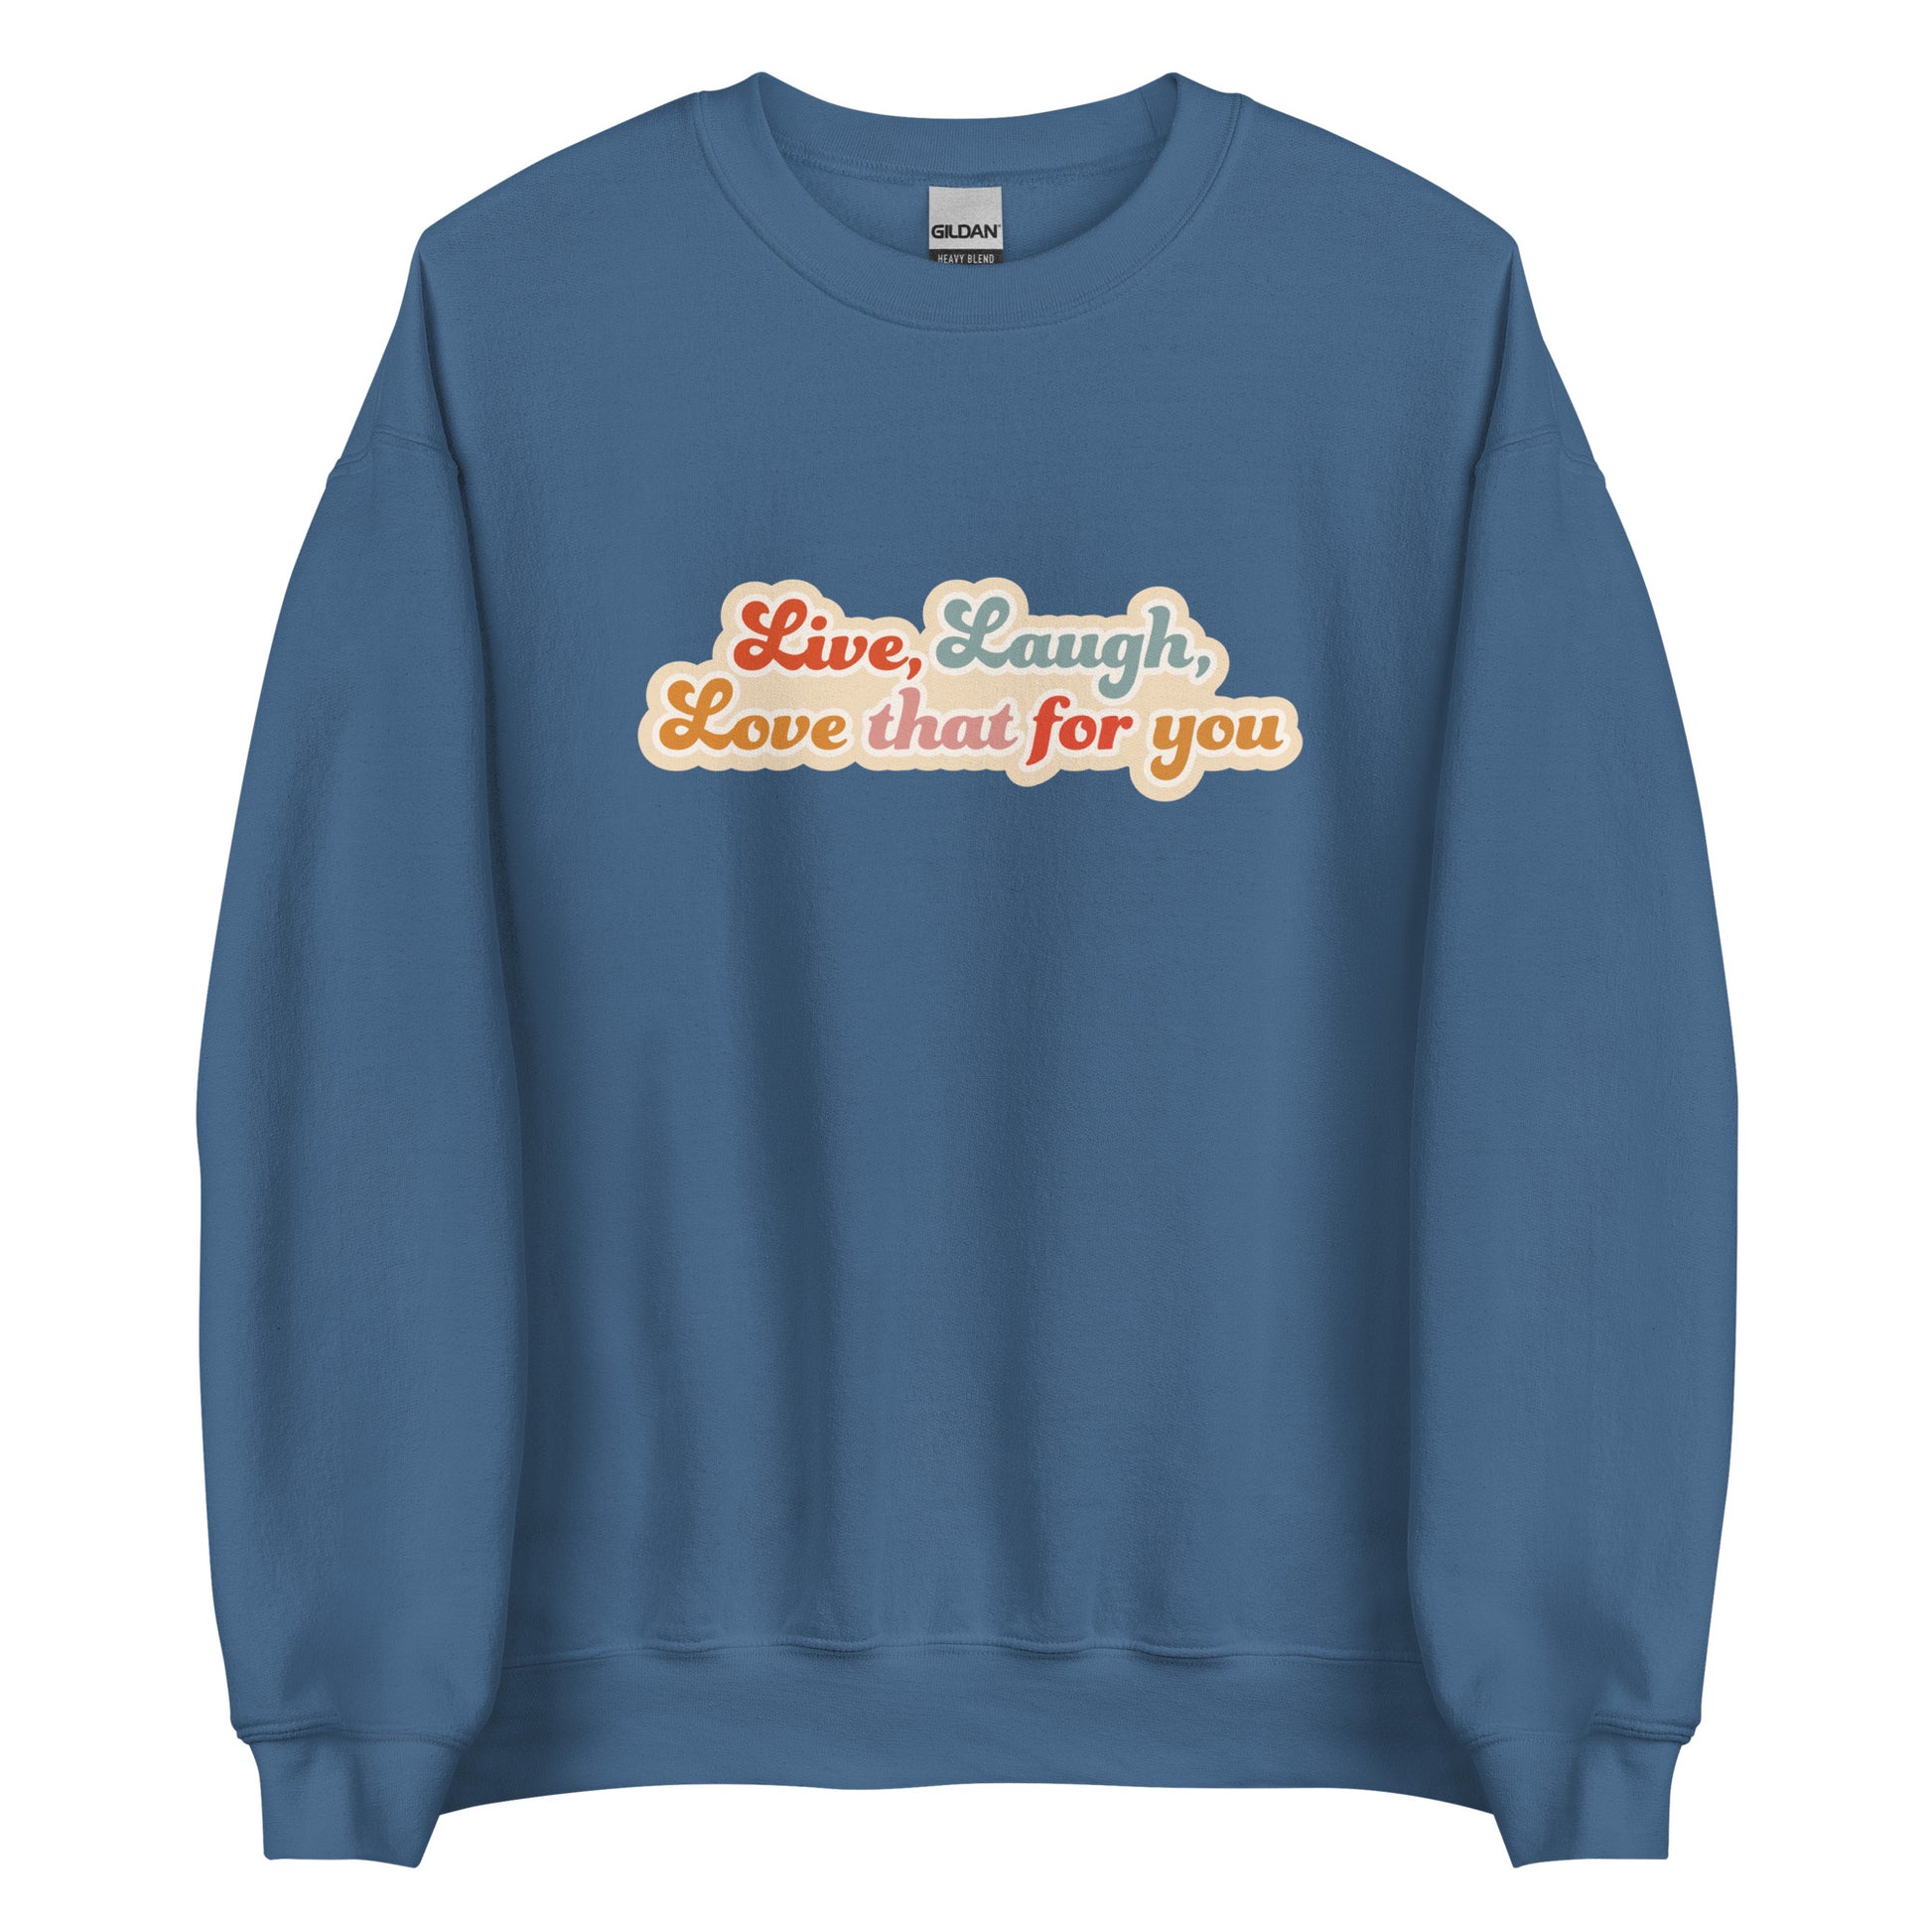 A blue crewneck sweatshirt featuring colorful, cursive text that reads "Live, Laugh, Love that for you"